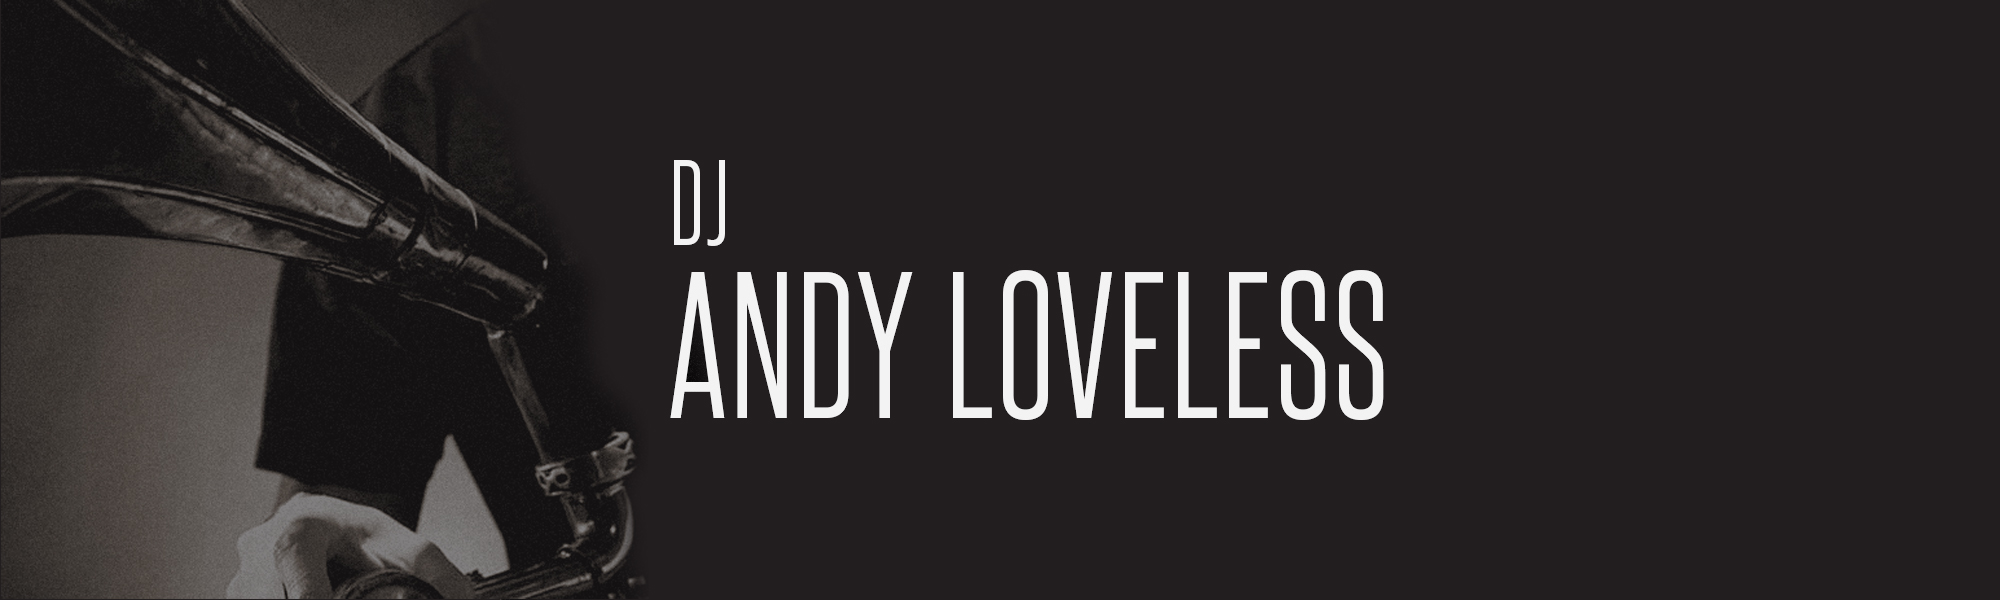 dj andy loveless